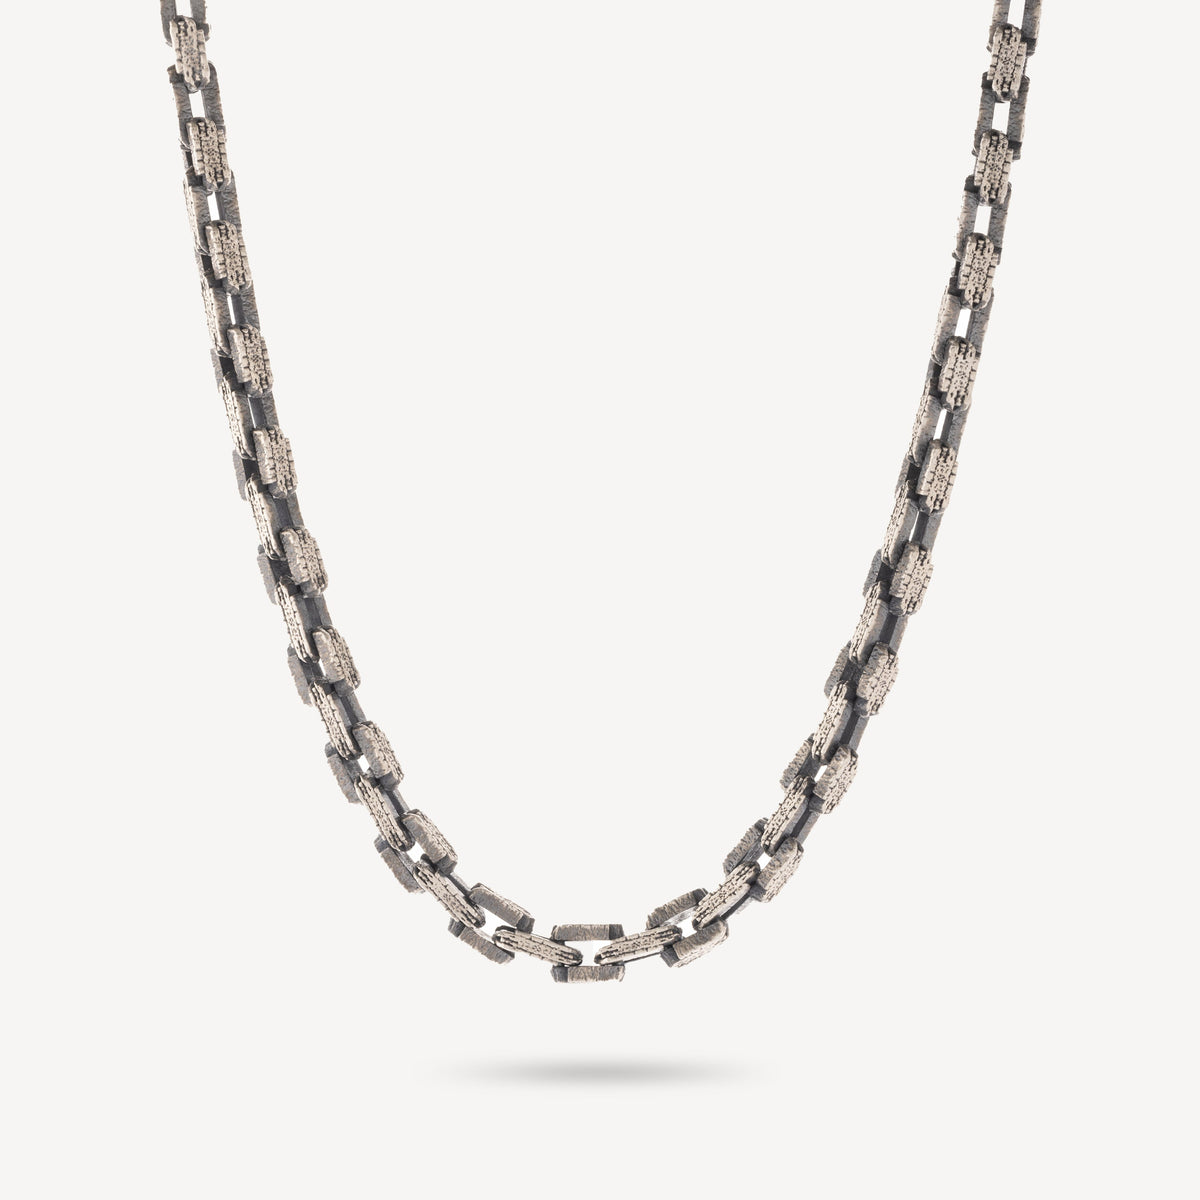 AZK-VK01 Large Silver Necklace